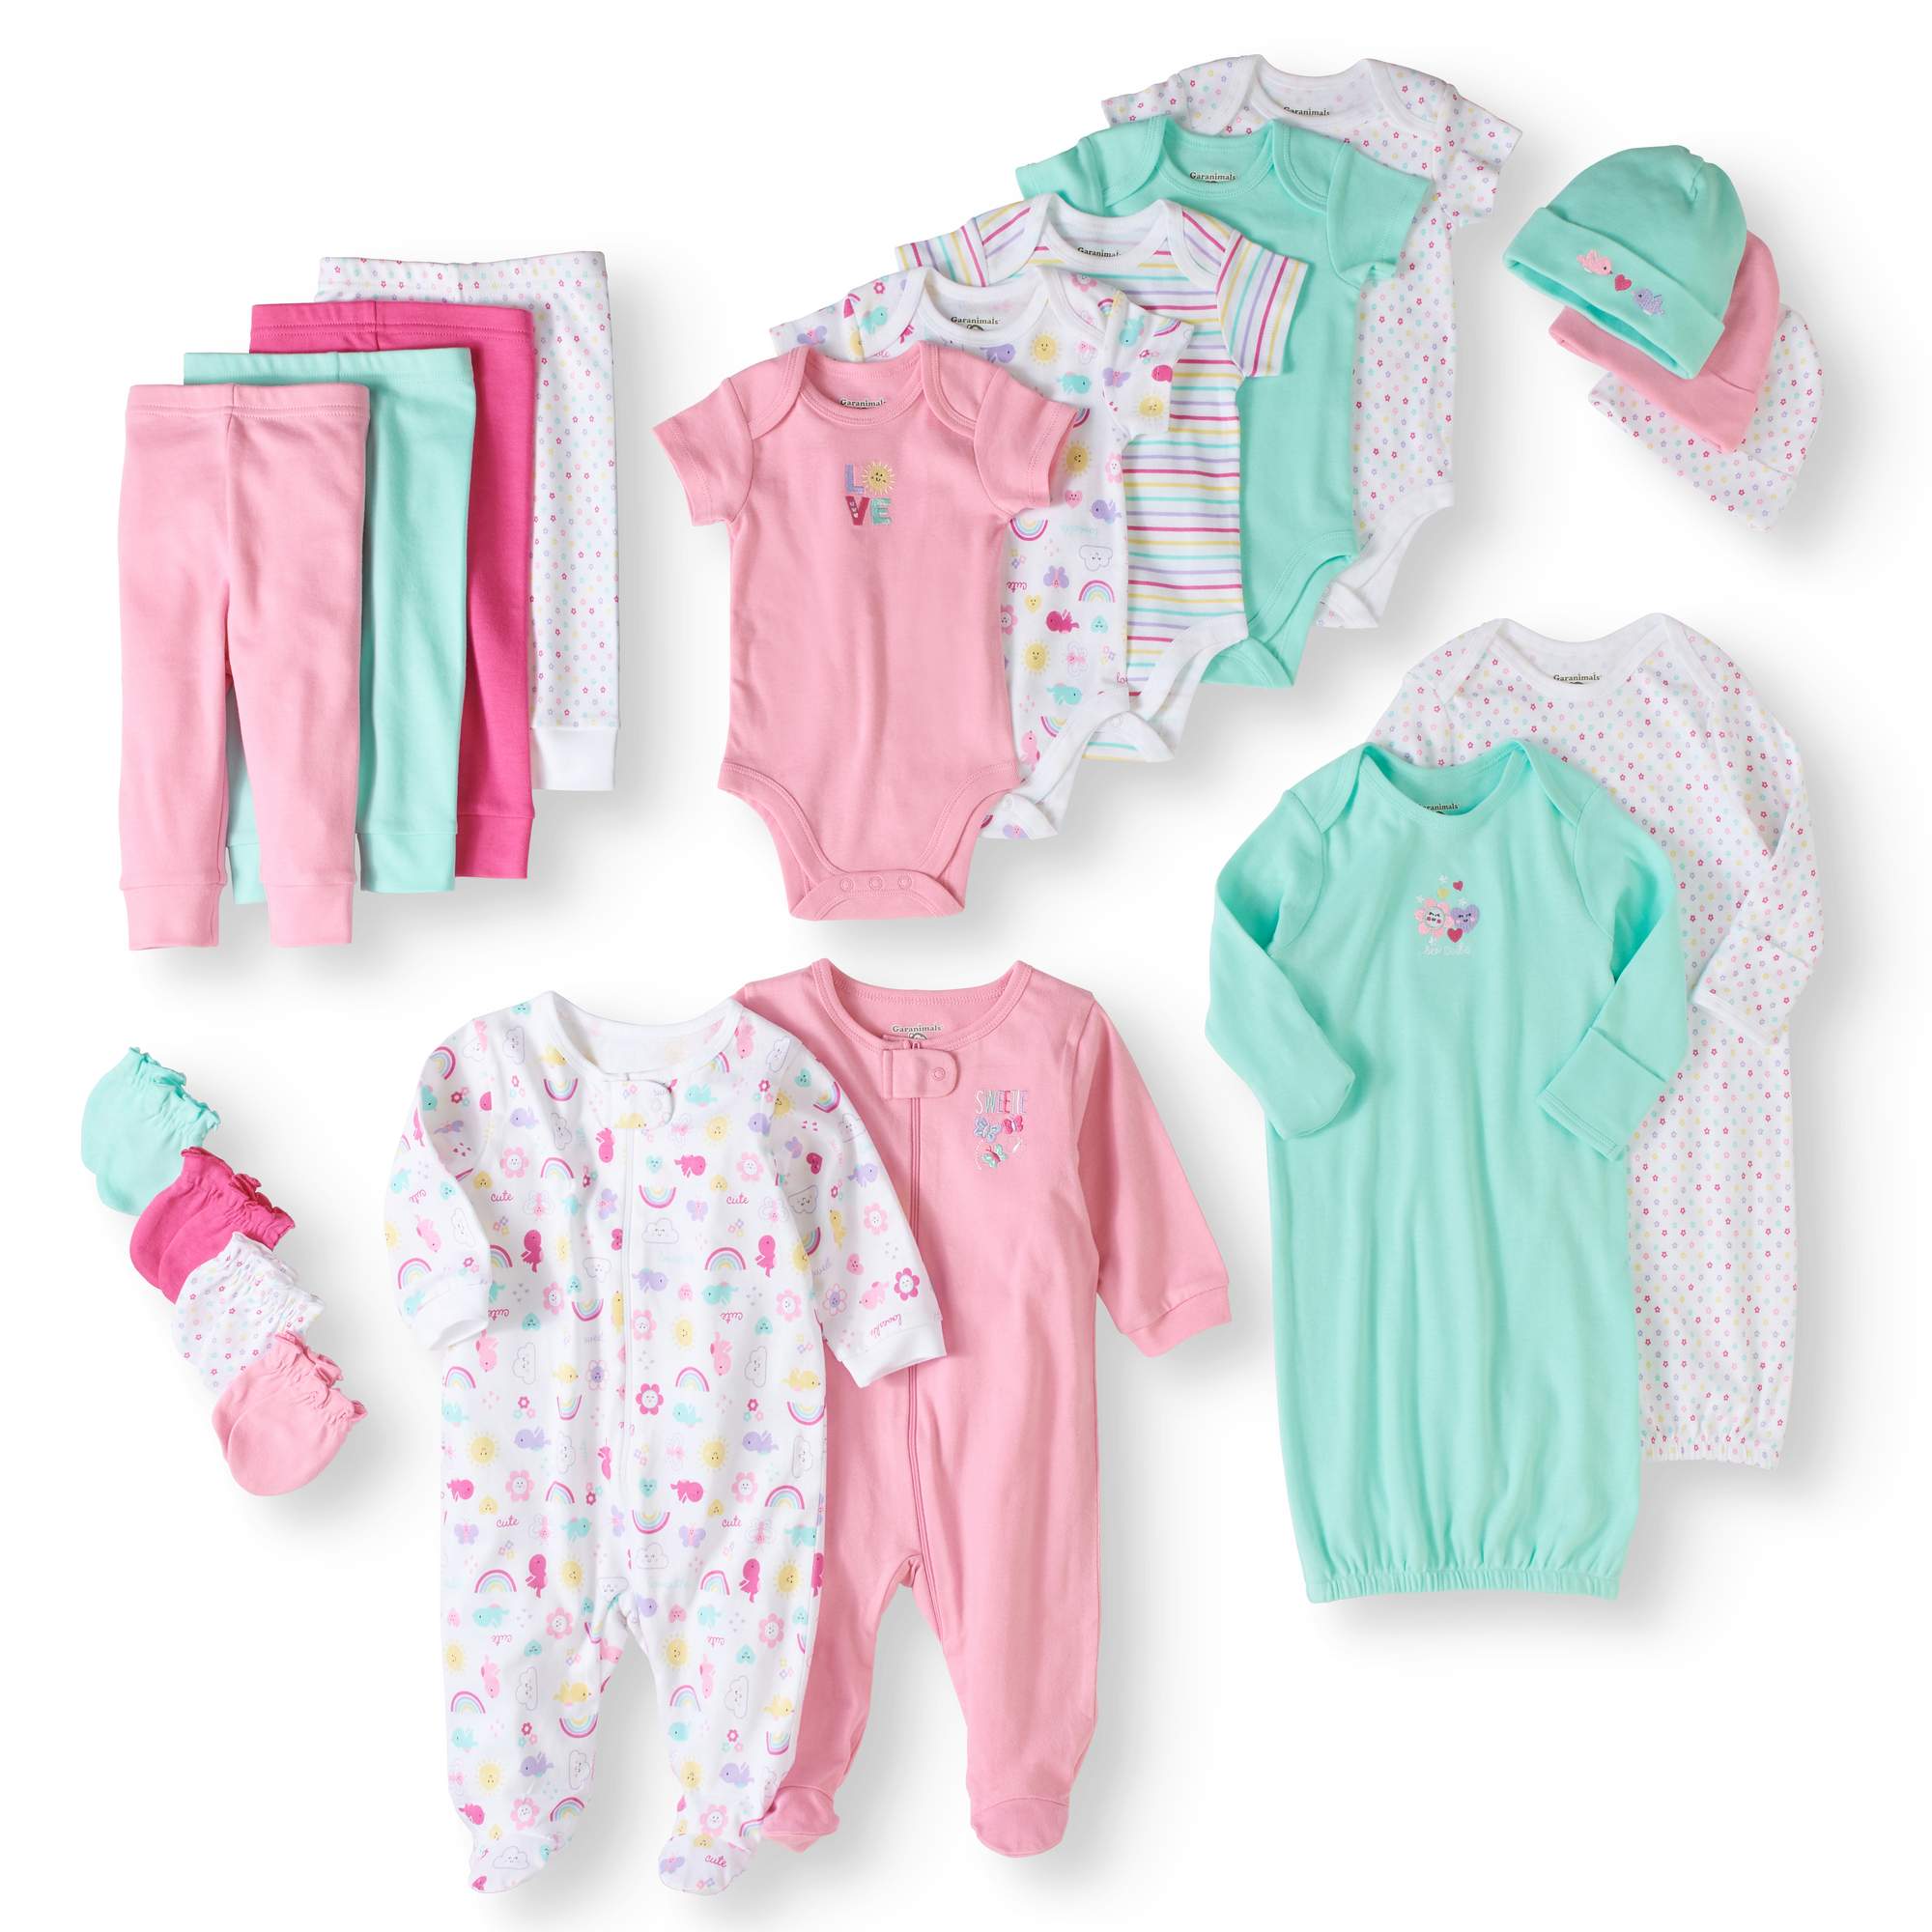 Personalised Baby Pram 3 Piece Set Girls Baby Outfits Newborn Baby Gifts